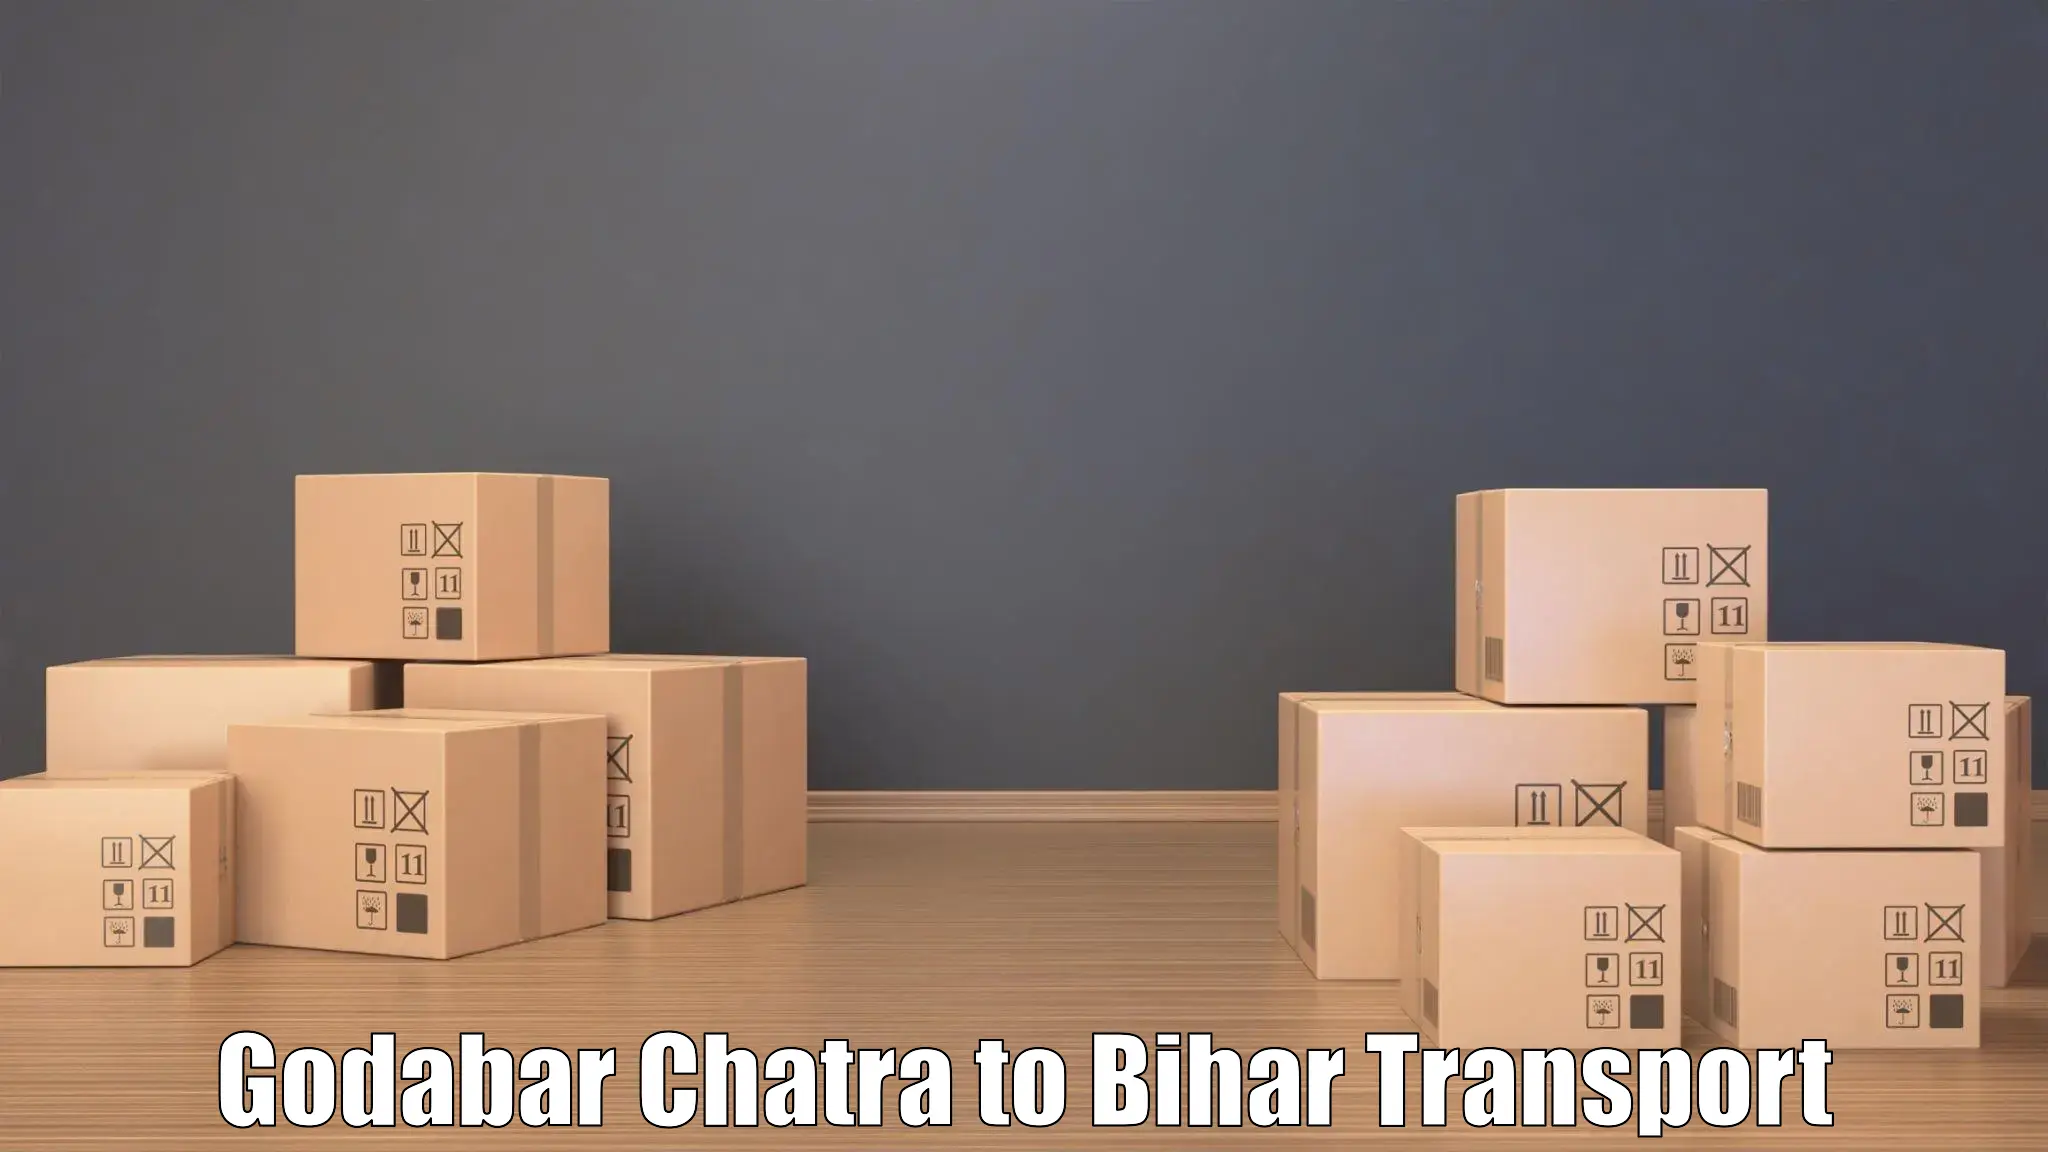 Express transport services Godabar Chatra to Simrahi Bazar